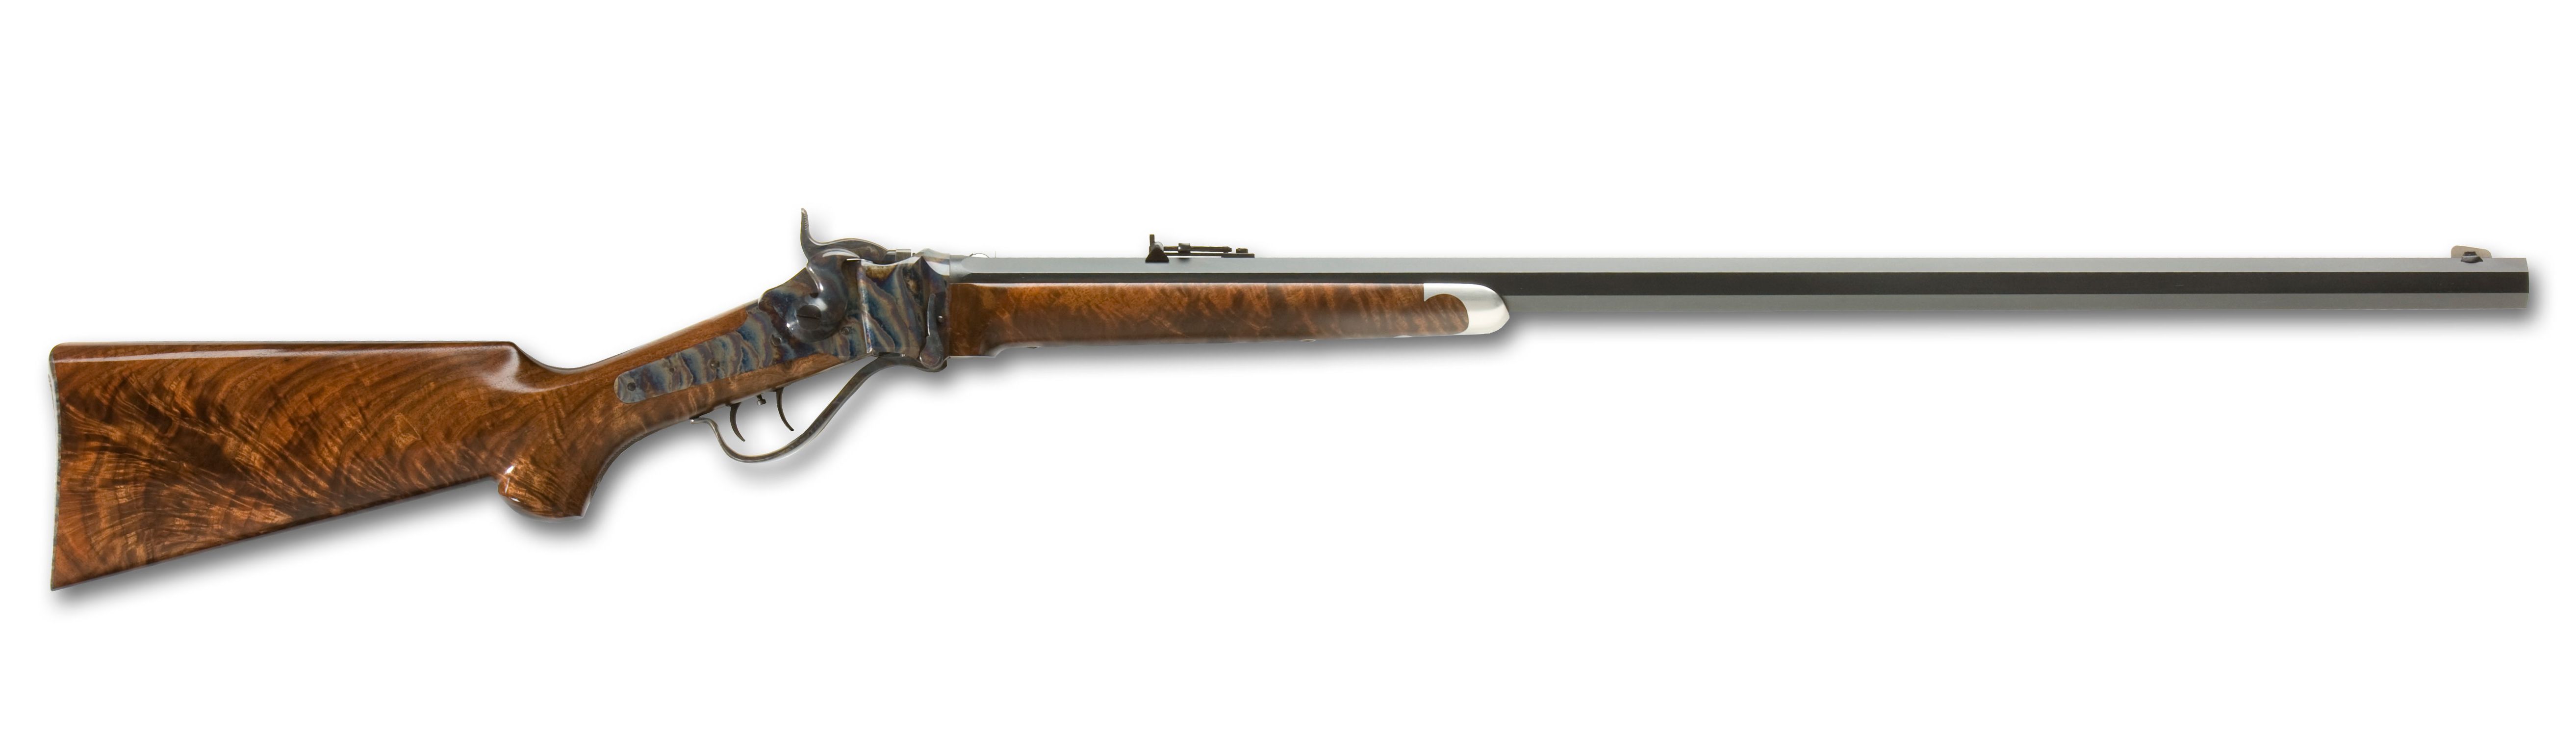 Sharps 1874 Rifle #18